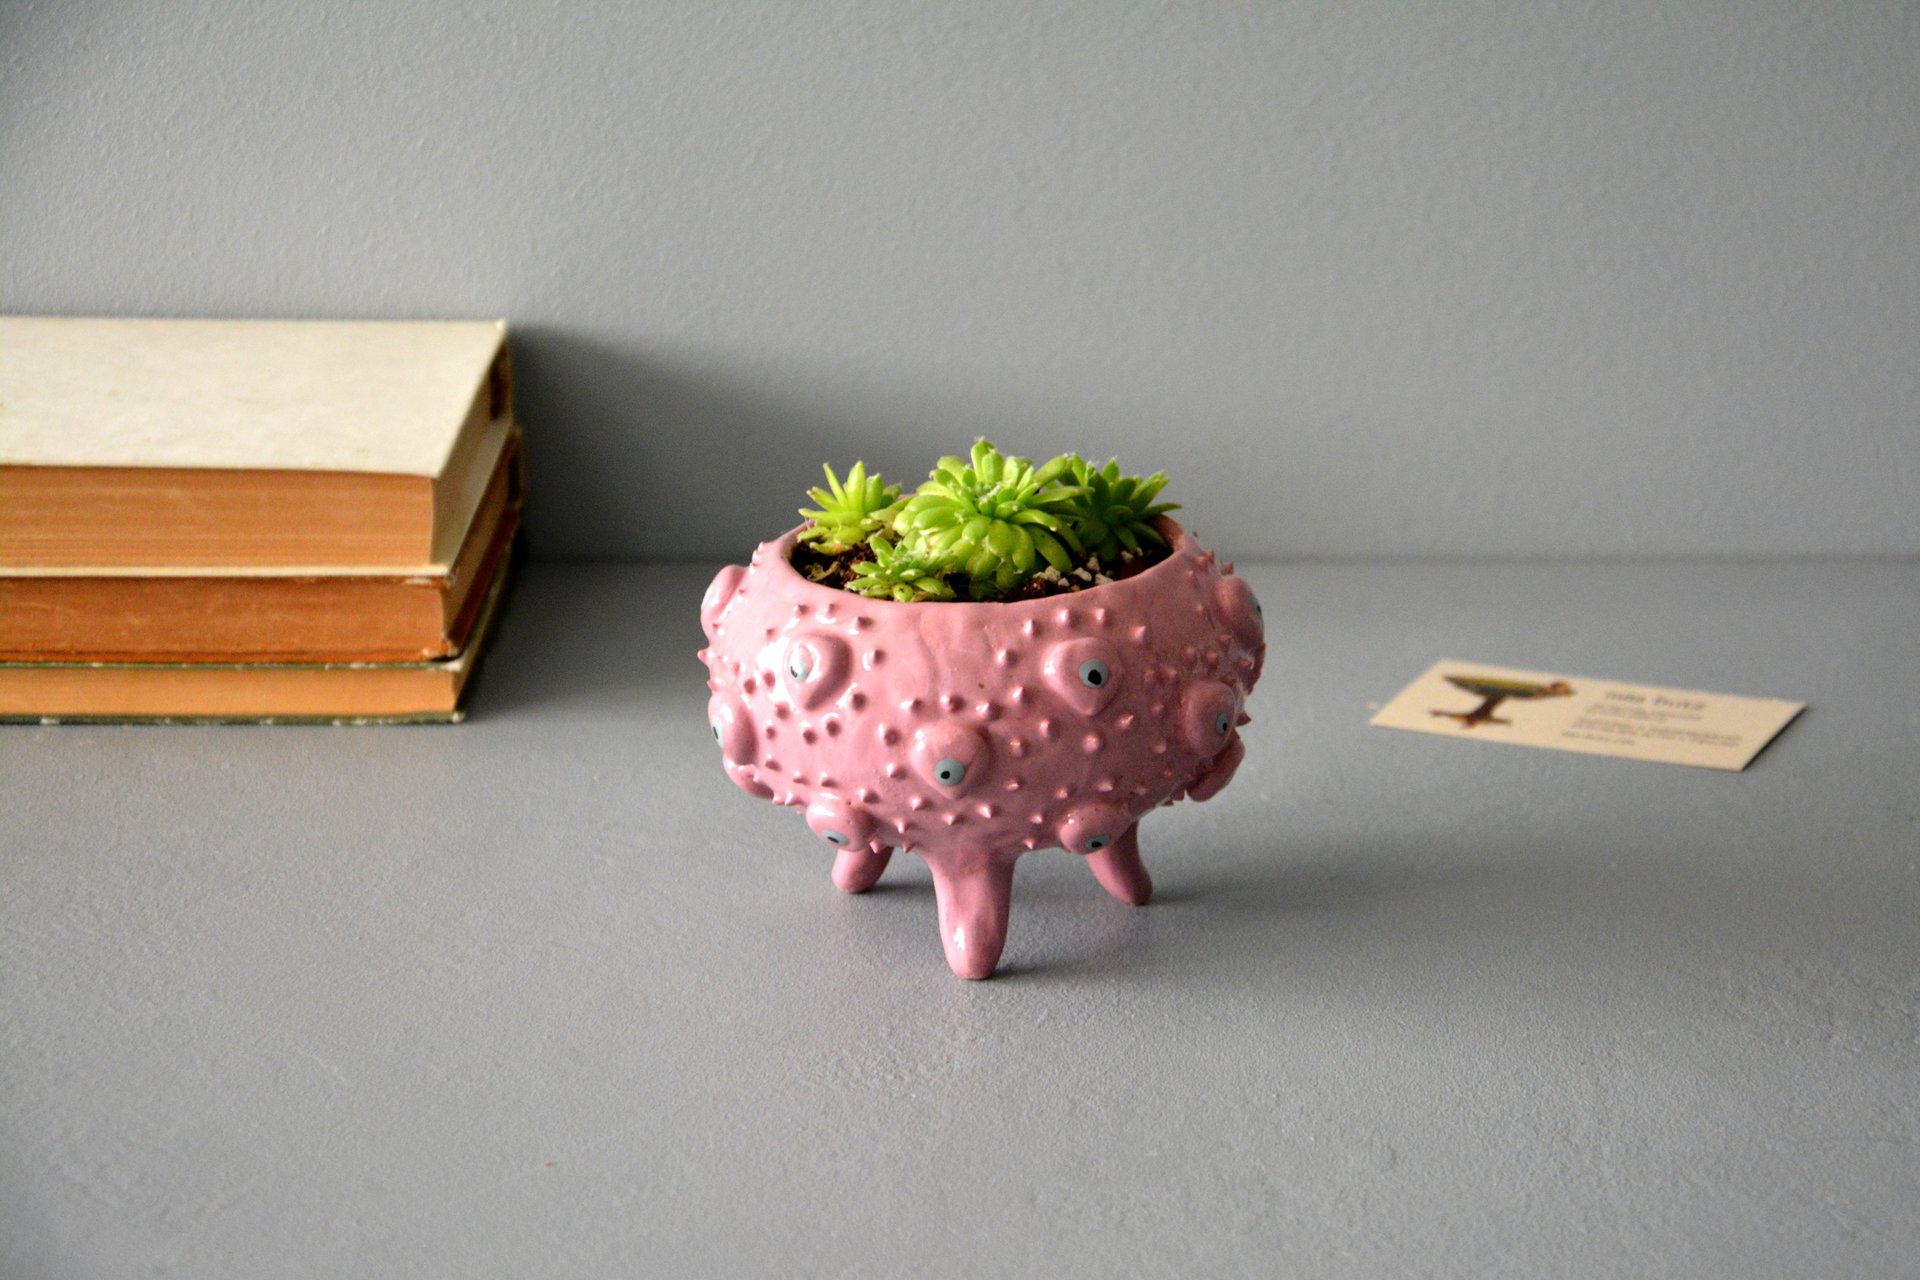 Pink ceramic flower pots for succulents, height - 8,5 cm, diameter (internal) - 8 cm, photo 2 of 4.